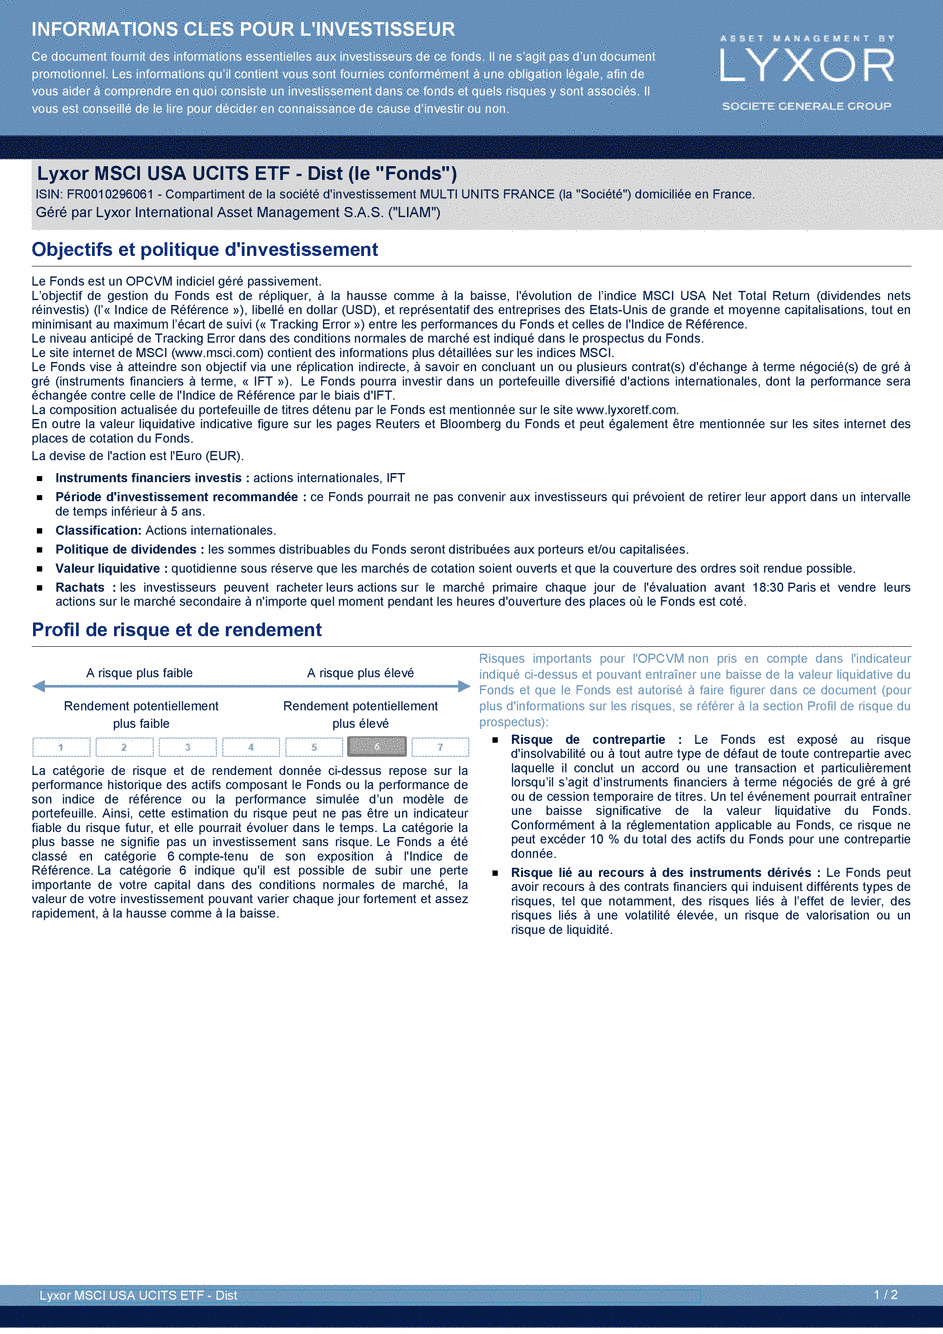 DICI Lyxor MSCI USA UCITS ETF - Dist - 19/02/2021 - Français